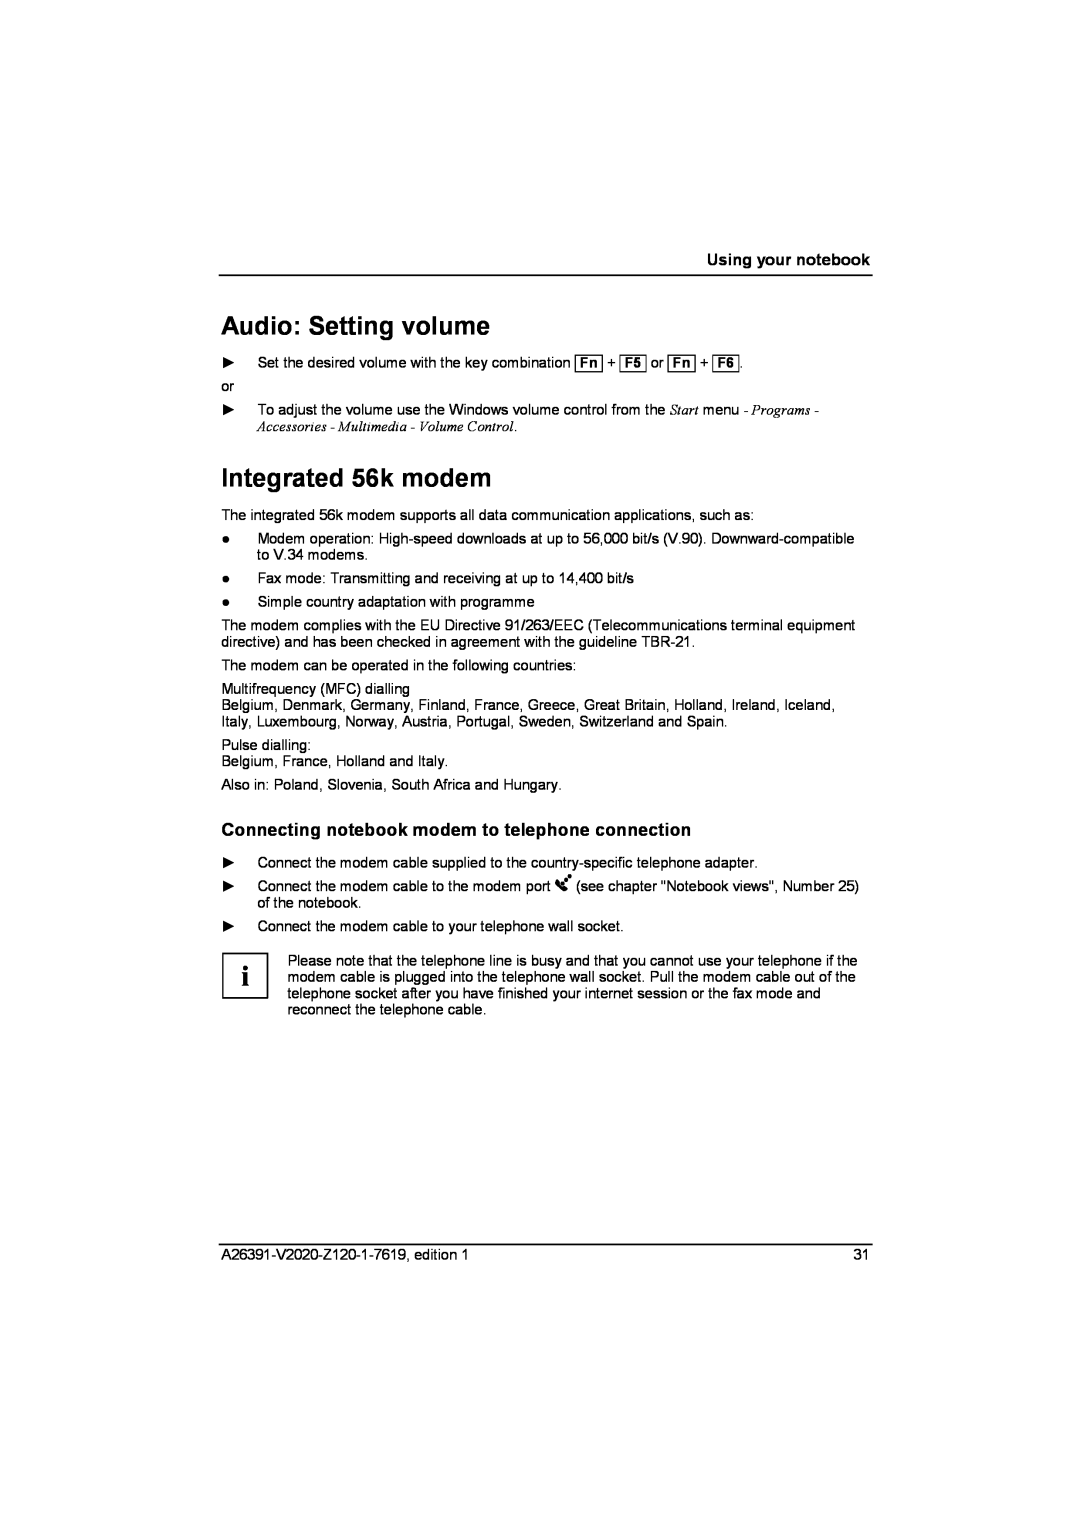 Fujitsu Siemens Computers V2020 manual Audio Setting volume, Integrated 56k modem, Using your notebook 